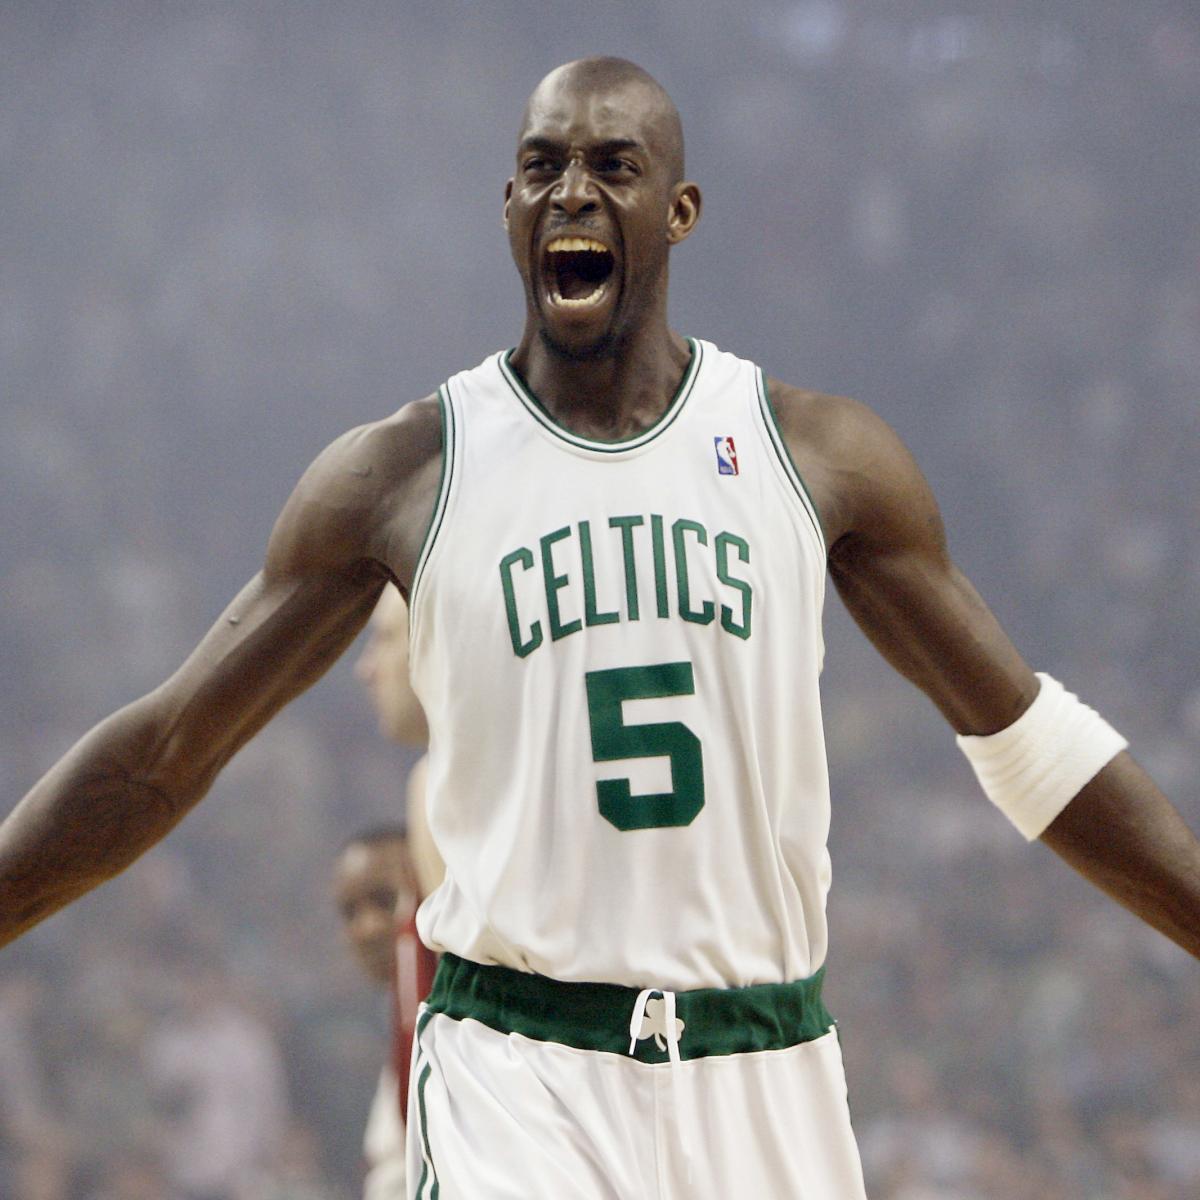 Celtics Legend Kevin Says Being Called a Hall of Famer Is